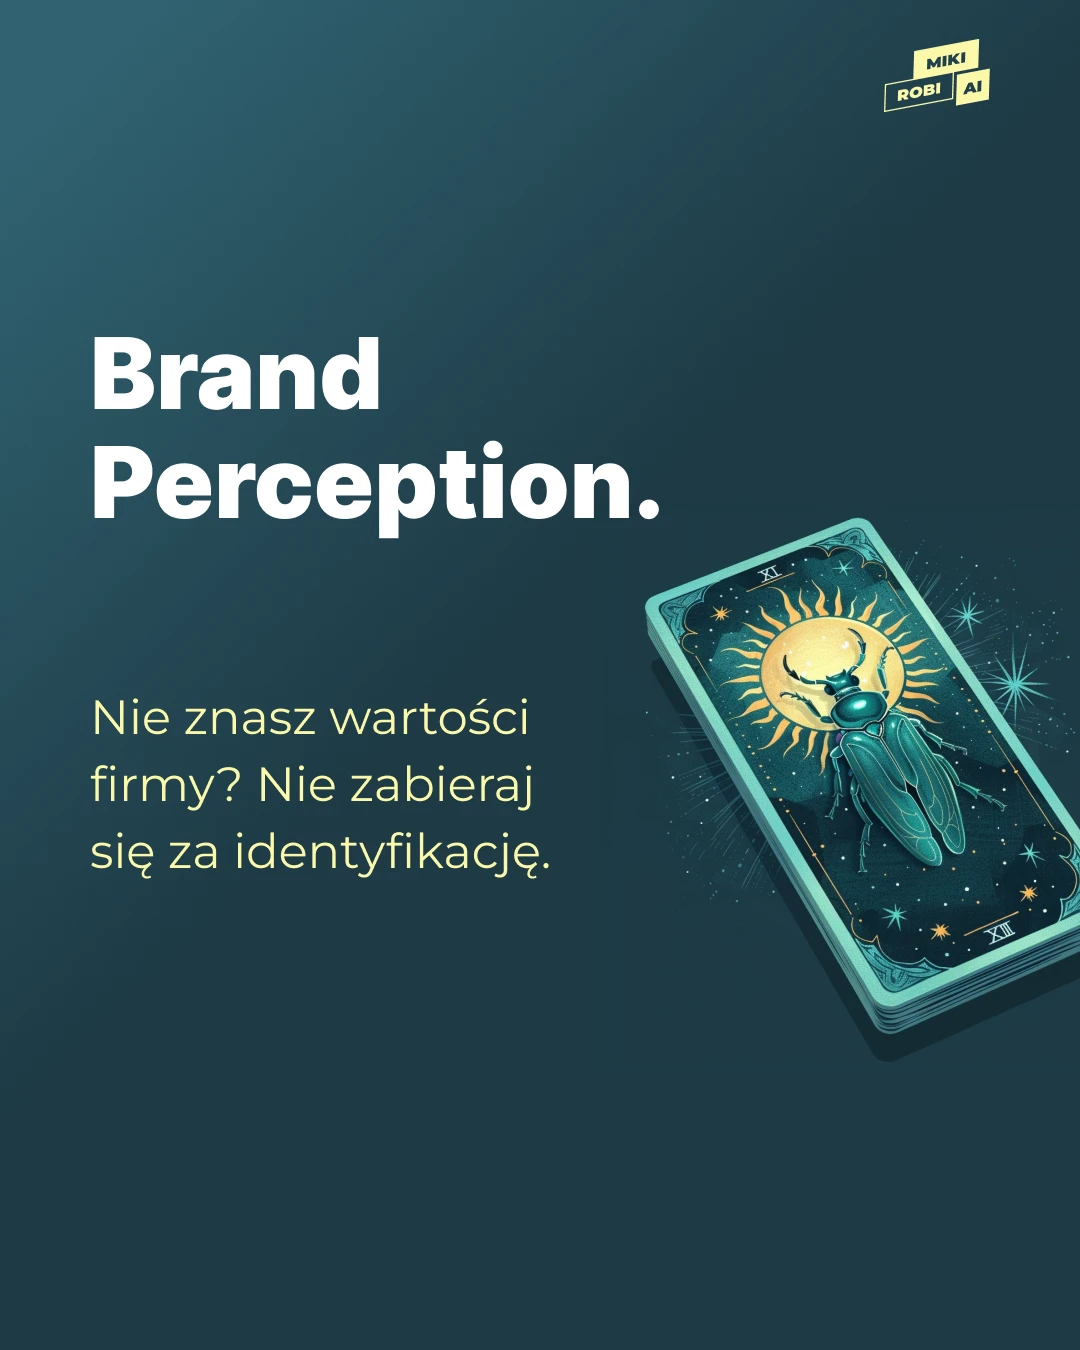 Brand perception - MikiRobiAi